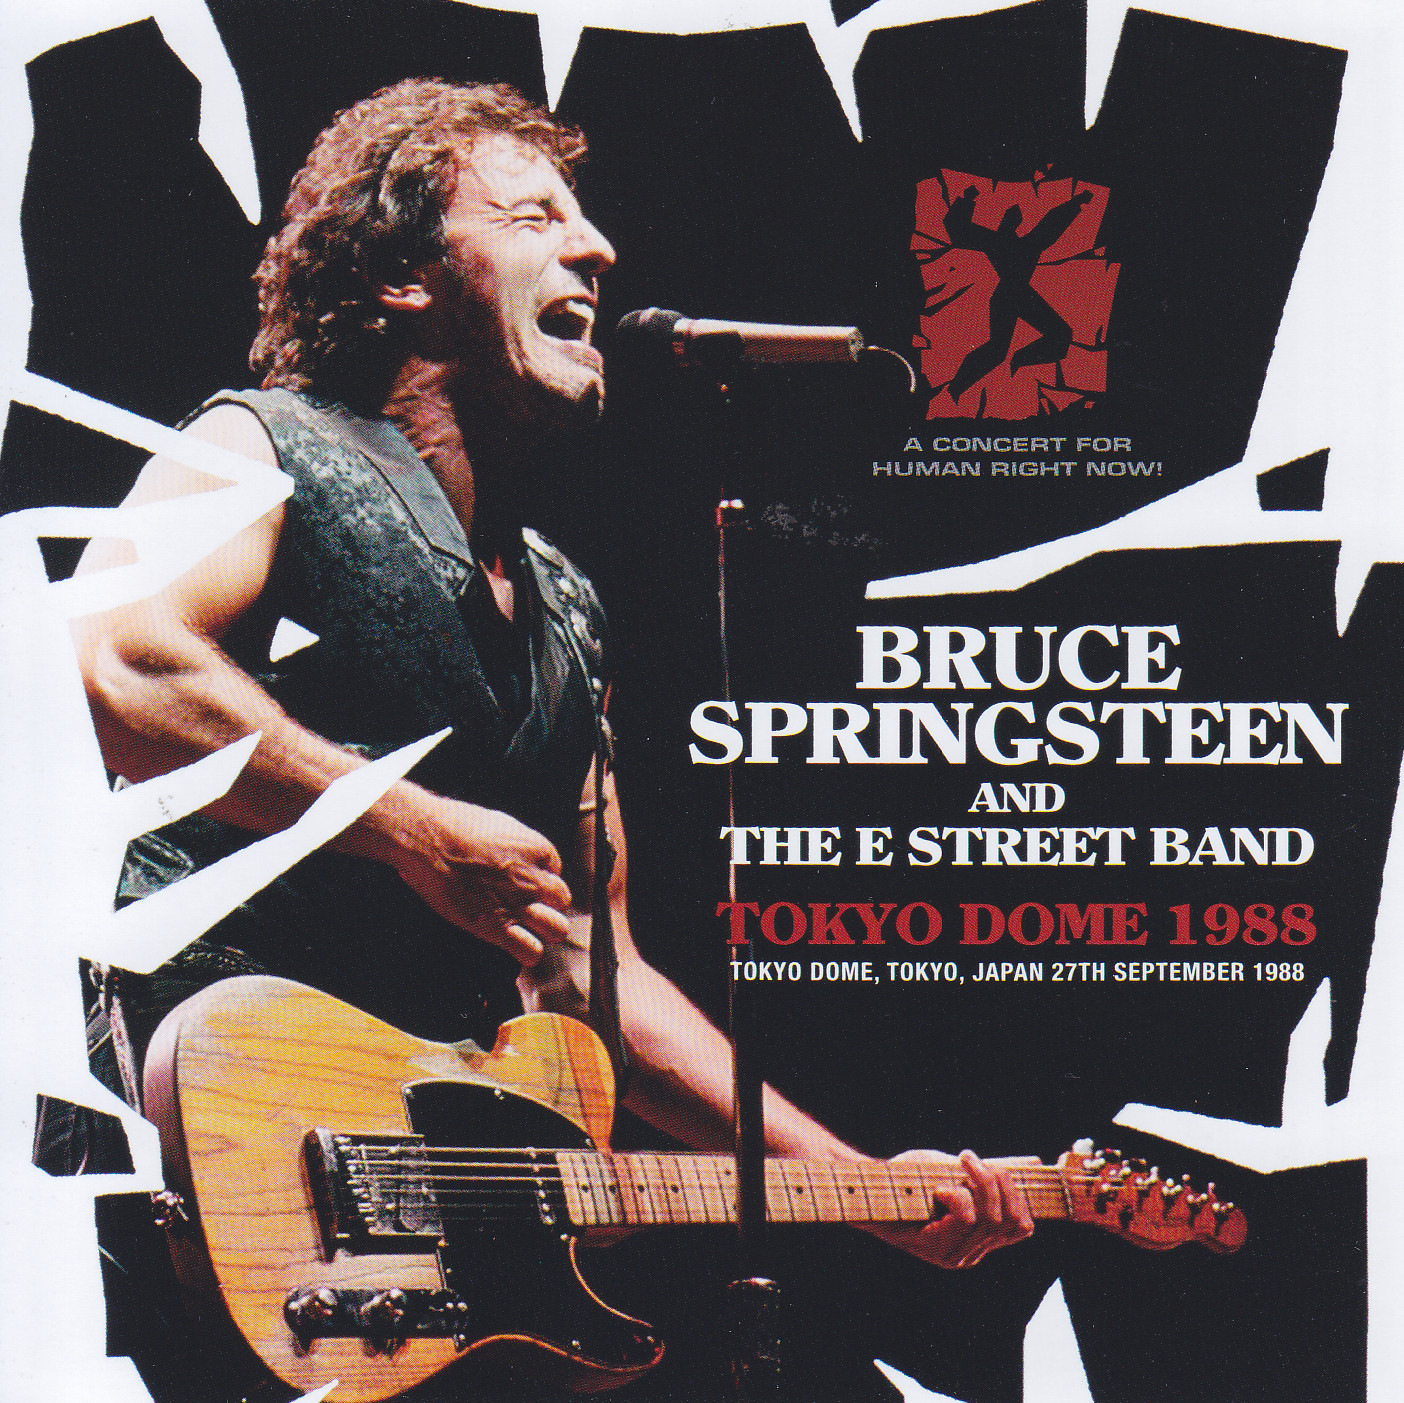 Bruce Springsteen u0026 The E Street Band / Tokyo Dome 1988 / 2CD – GiGinJapan